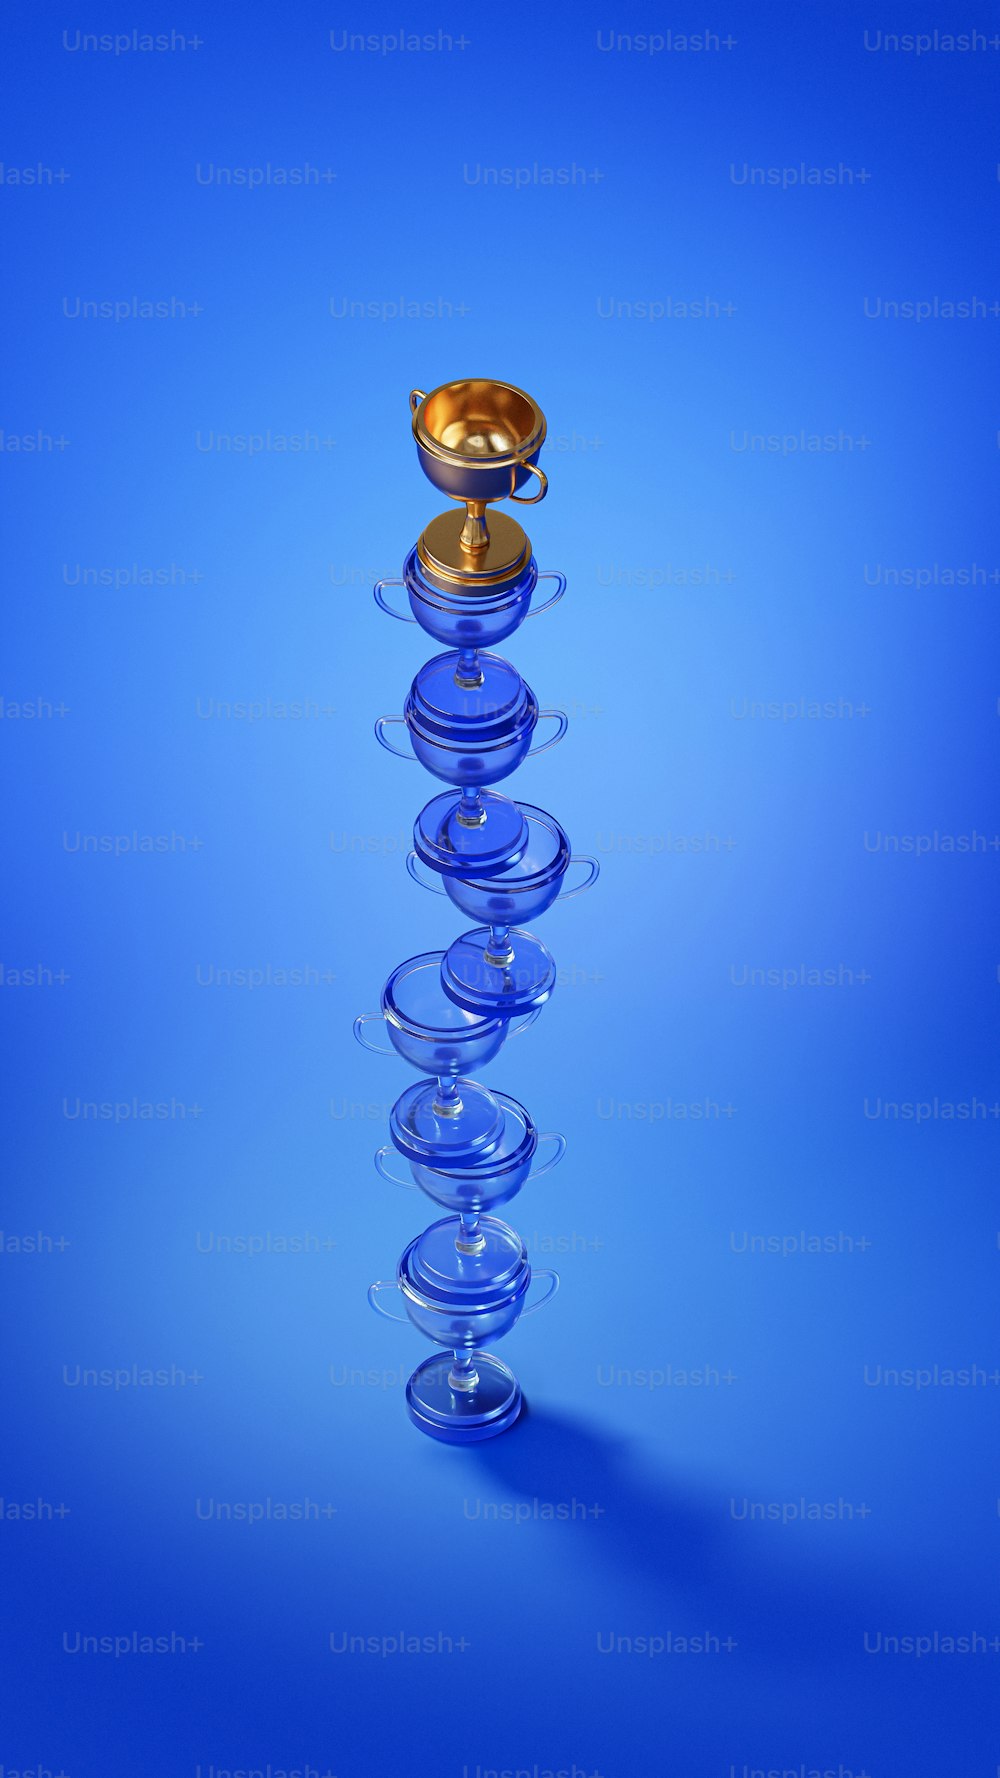 Un objeto azul con un objeto dorado encima